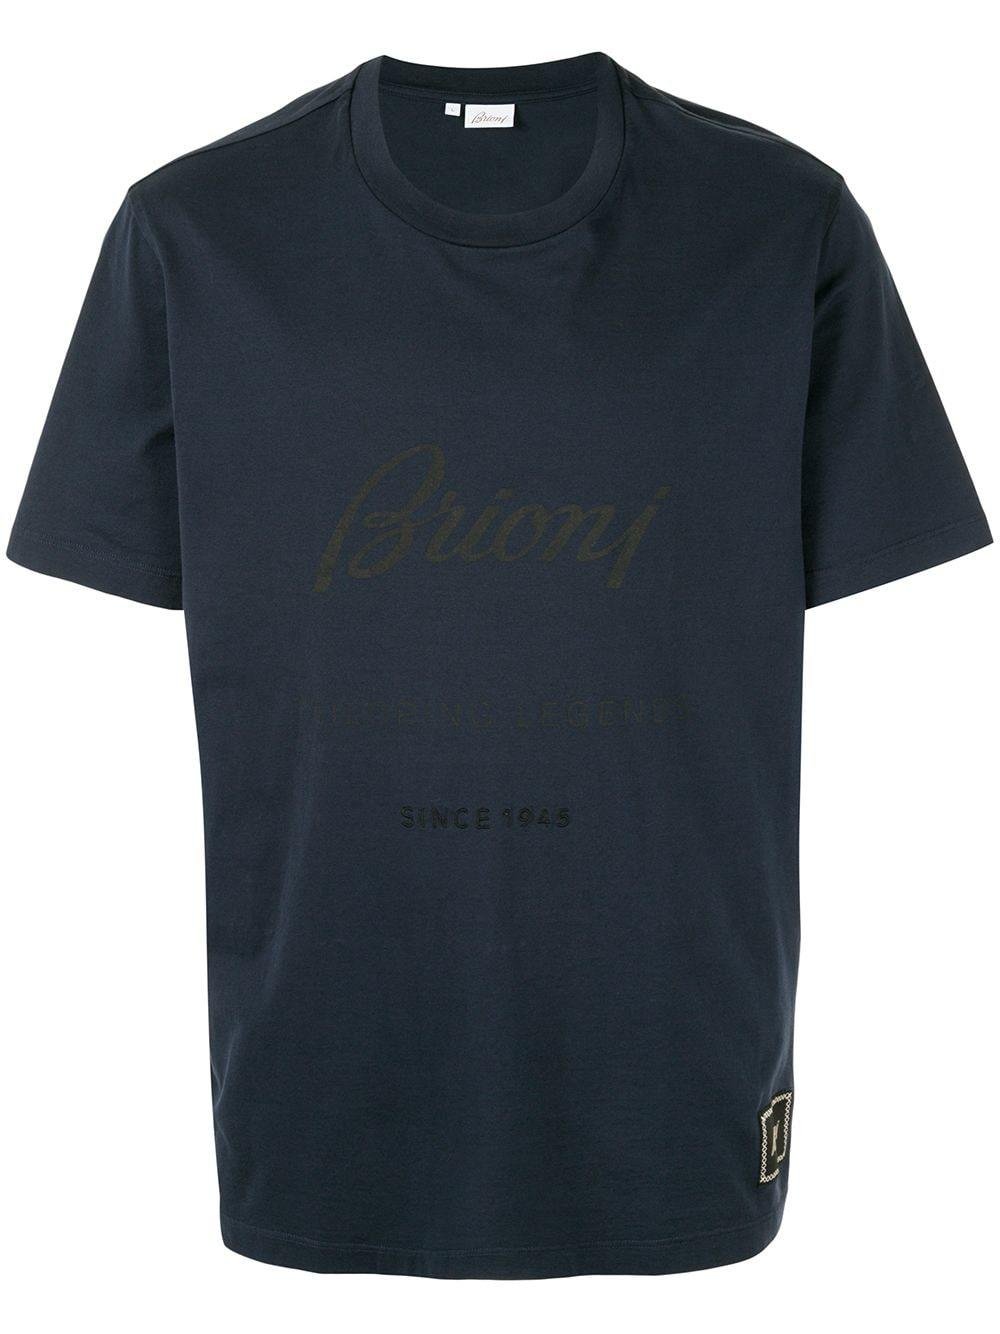 Brioni Cotton Logo Print Short-sleeve T-shirt in Blue for Men - Lyst